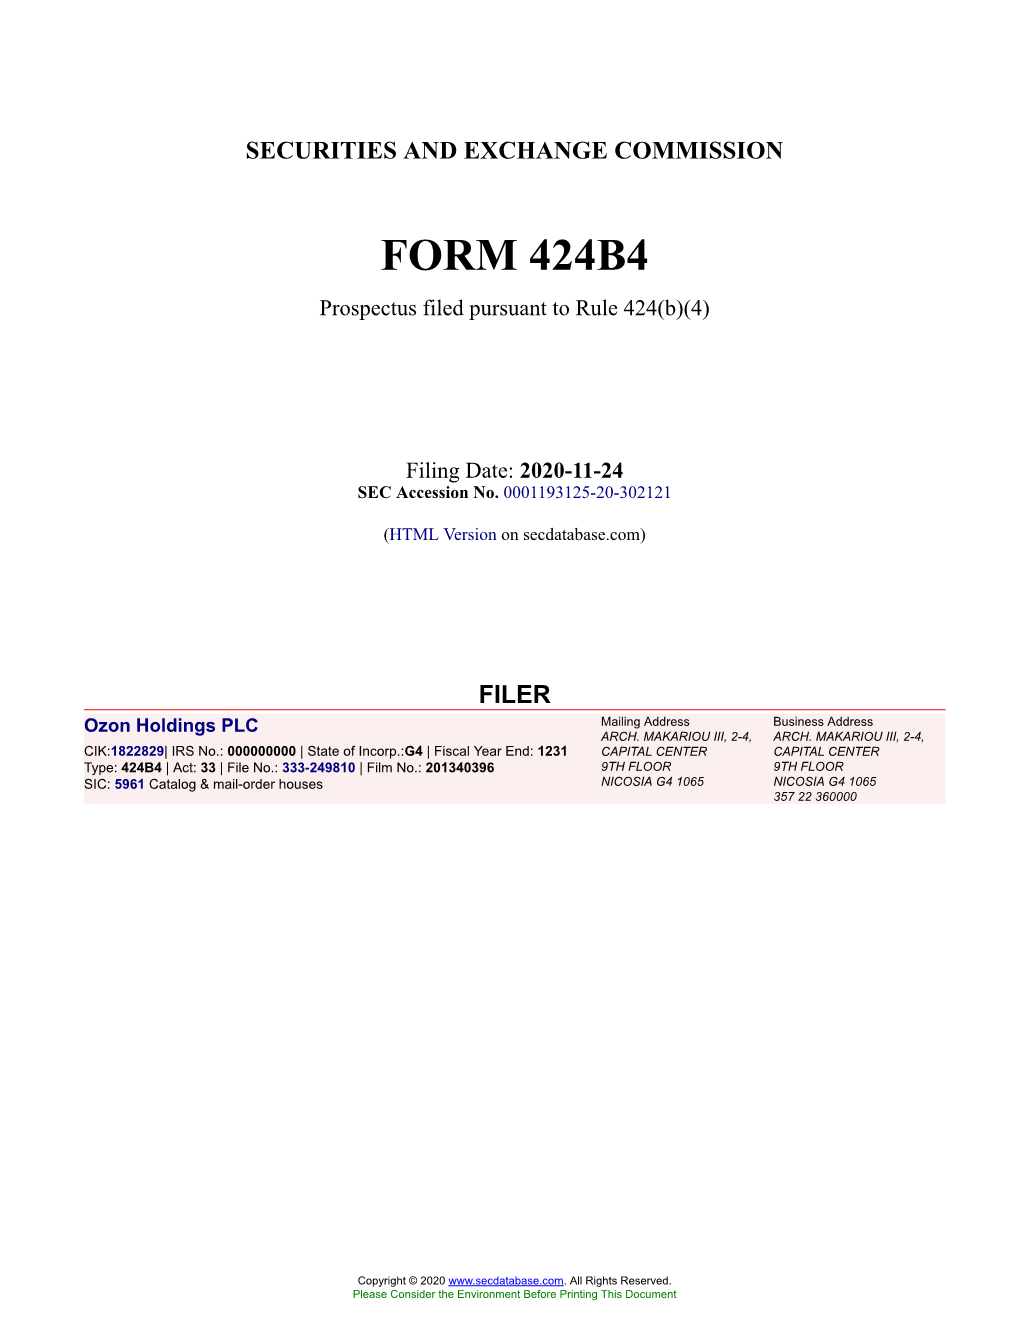 Ozon Holdings PLC Form 424B4 Filed 2020-11-24